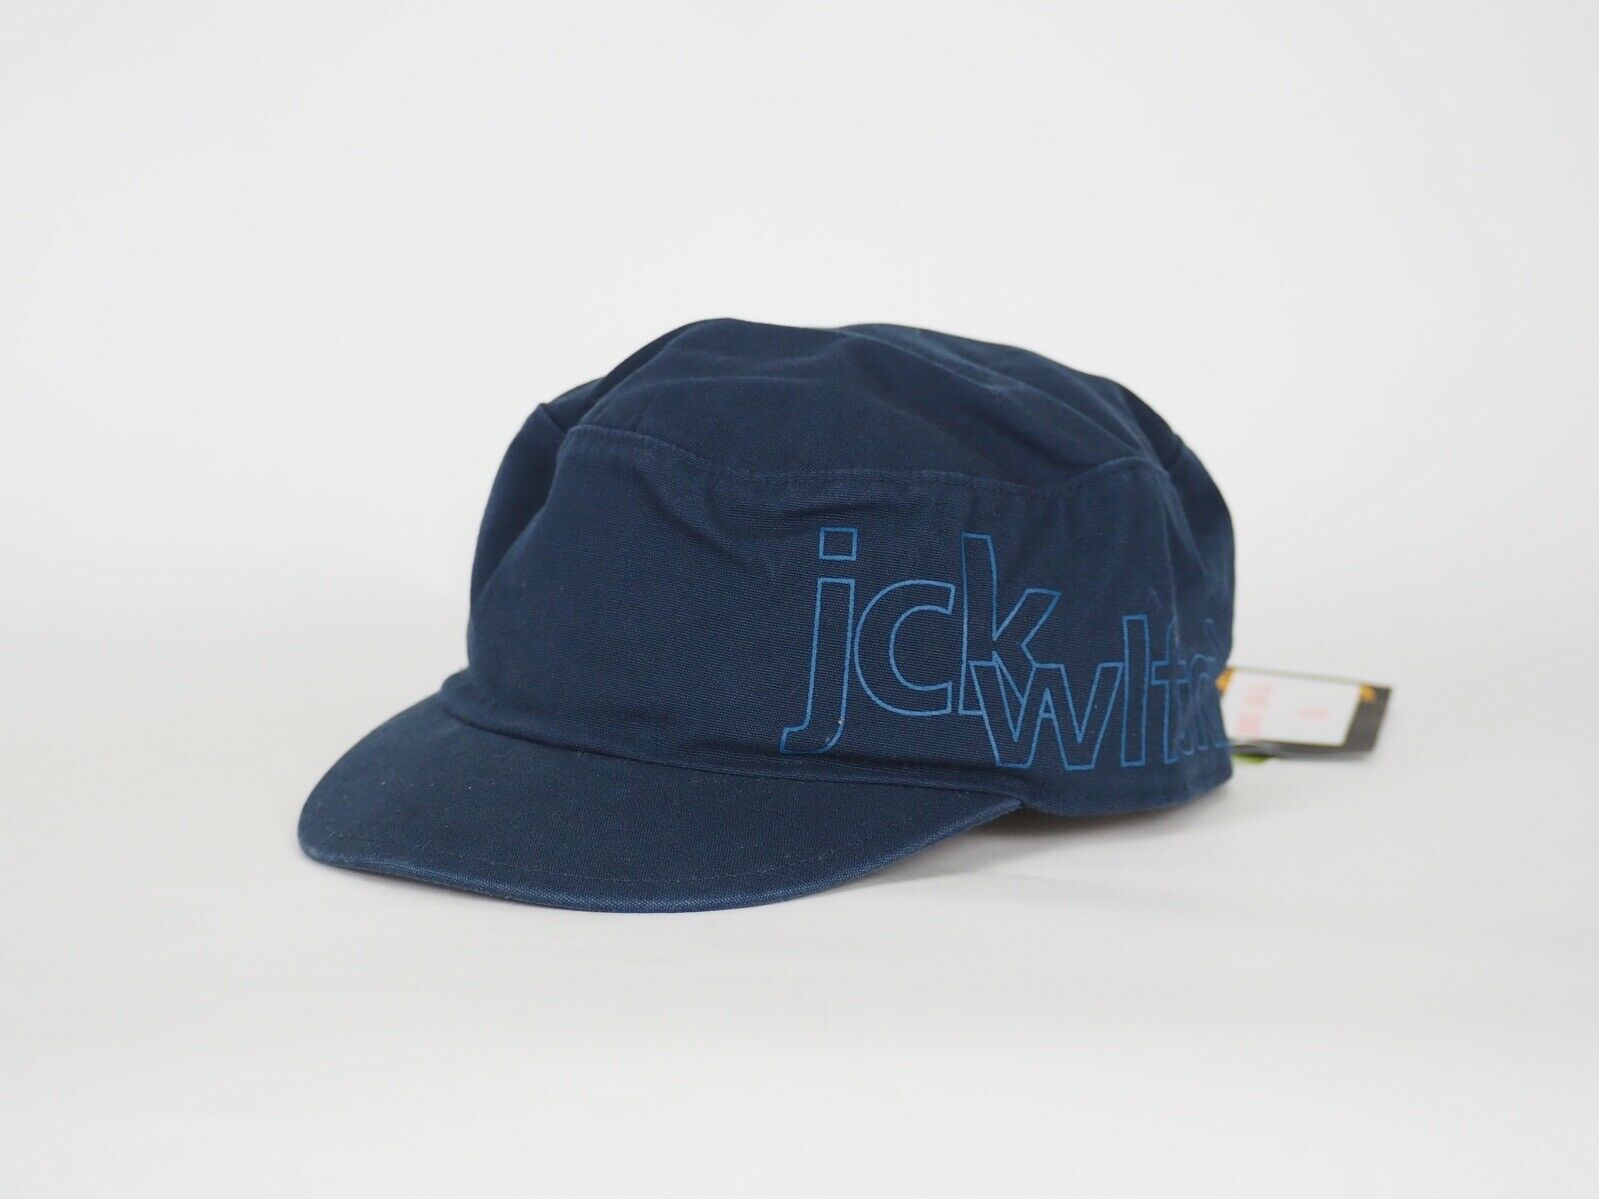 Womens Jack Wolfskin Mendora Cap 1904281 Night Blue Casual Hat Sun Summer Cap - London Top Style